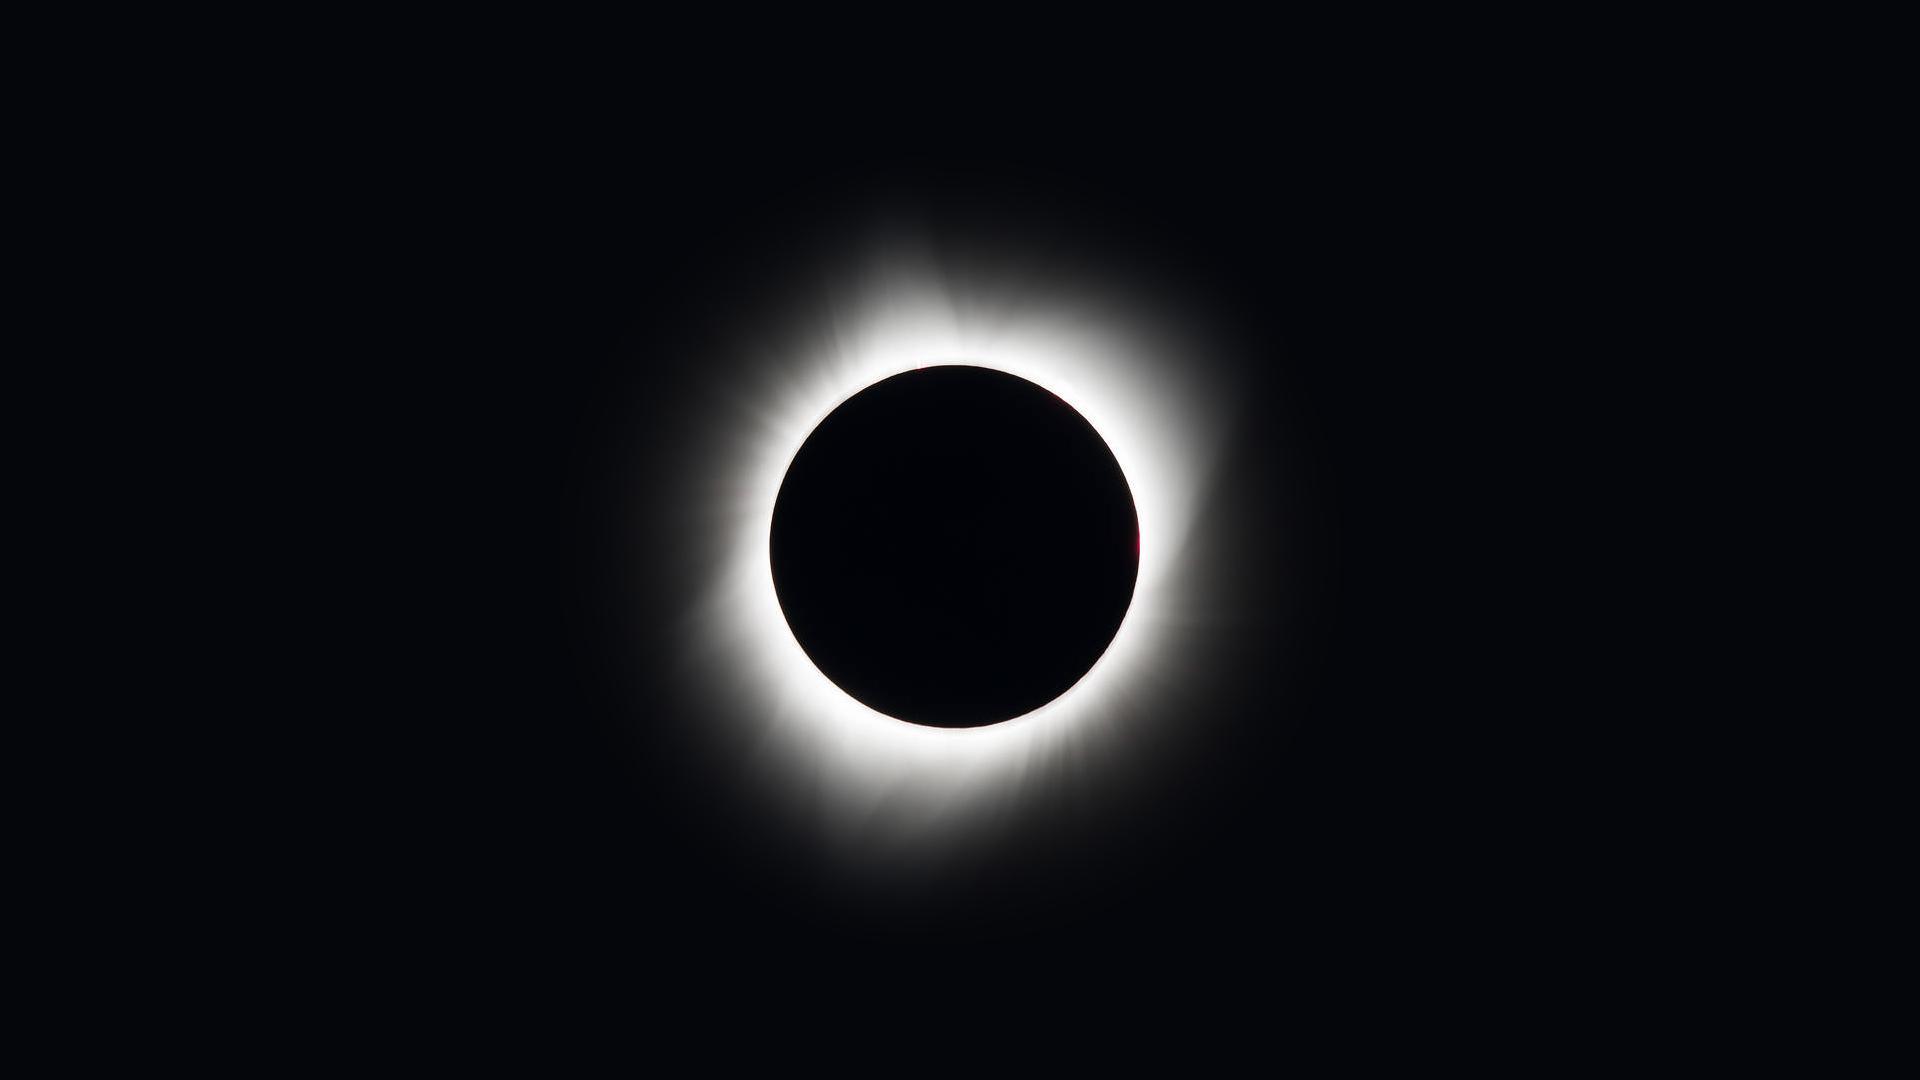 America's 2017 Total Solar Eclipse [1920x1080]; Courtesy of NASA